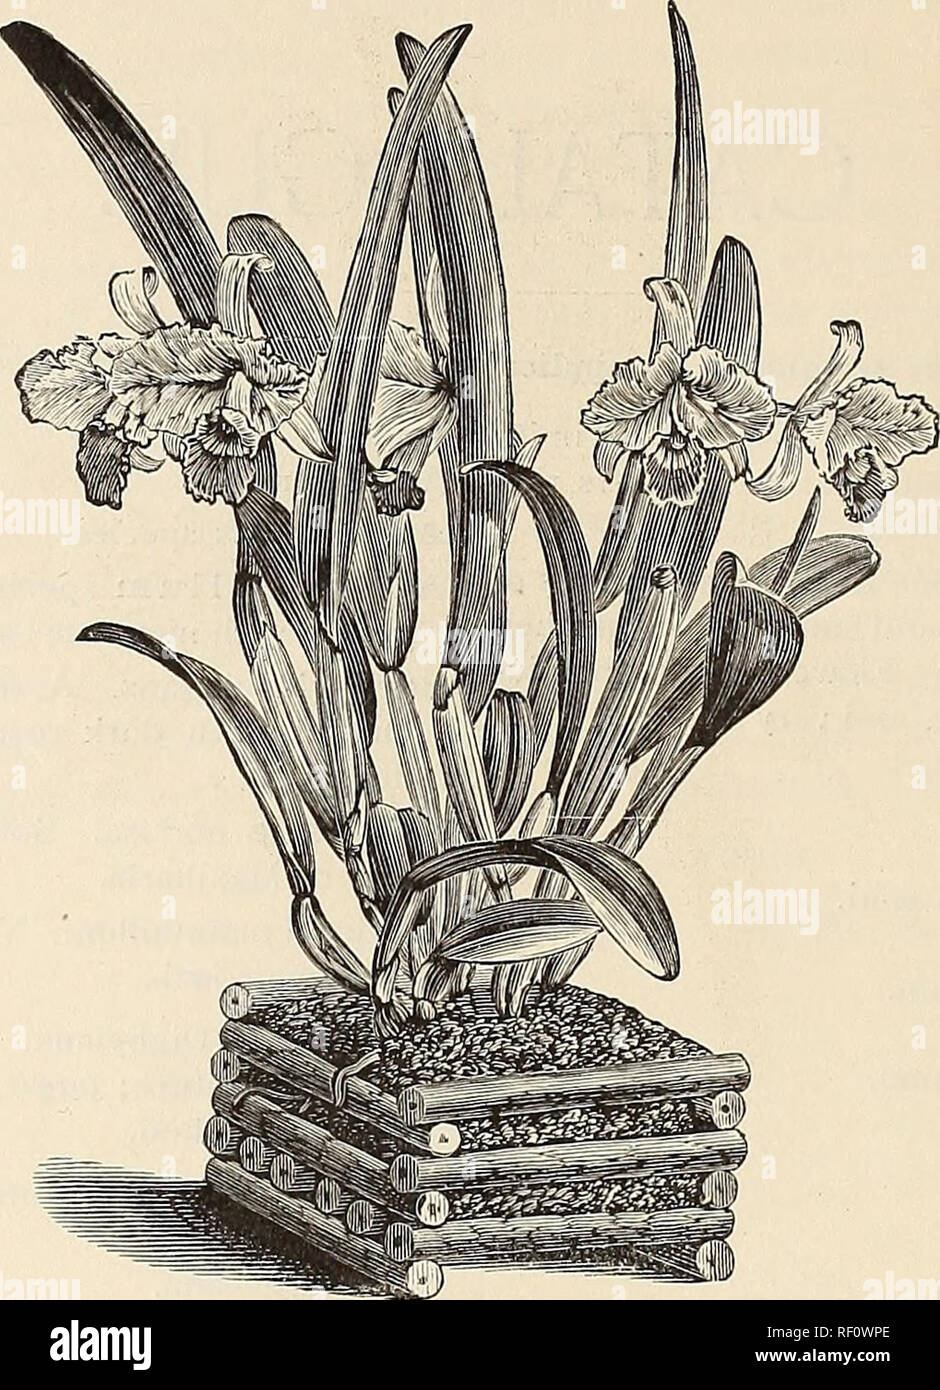 . Catalogue of orchids : orchids, palms and choice hothouse and greenhouse plants. Orchids, Catalogs; Plants, Ornamental, Catalogs; Commercial catalogs, New York (State), Utica. WM. MATHEWS, UT1CA, N. V.. CATTLEYA TRIAN/E. CATTLEYA, Continued. Cattleya Mossiae. C. bicolor. C. &quot; alba. C. Bowringeana. C. Percivaliana. C. Candida. C. Perrini. C. Chocoensis. c. Schroderiae. C. citrina. c. Skinneri. C. crispa. c. speciosissima. C. Dowiana. c. superba. C. eldorado. c. &quot; splendens. C. splendens. c. Trianae. C. Gaskelliana. c. &quot; delicata. C. gigas. c. Wagneri. C. Sanderiana. c. Walkeria Stock Photo